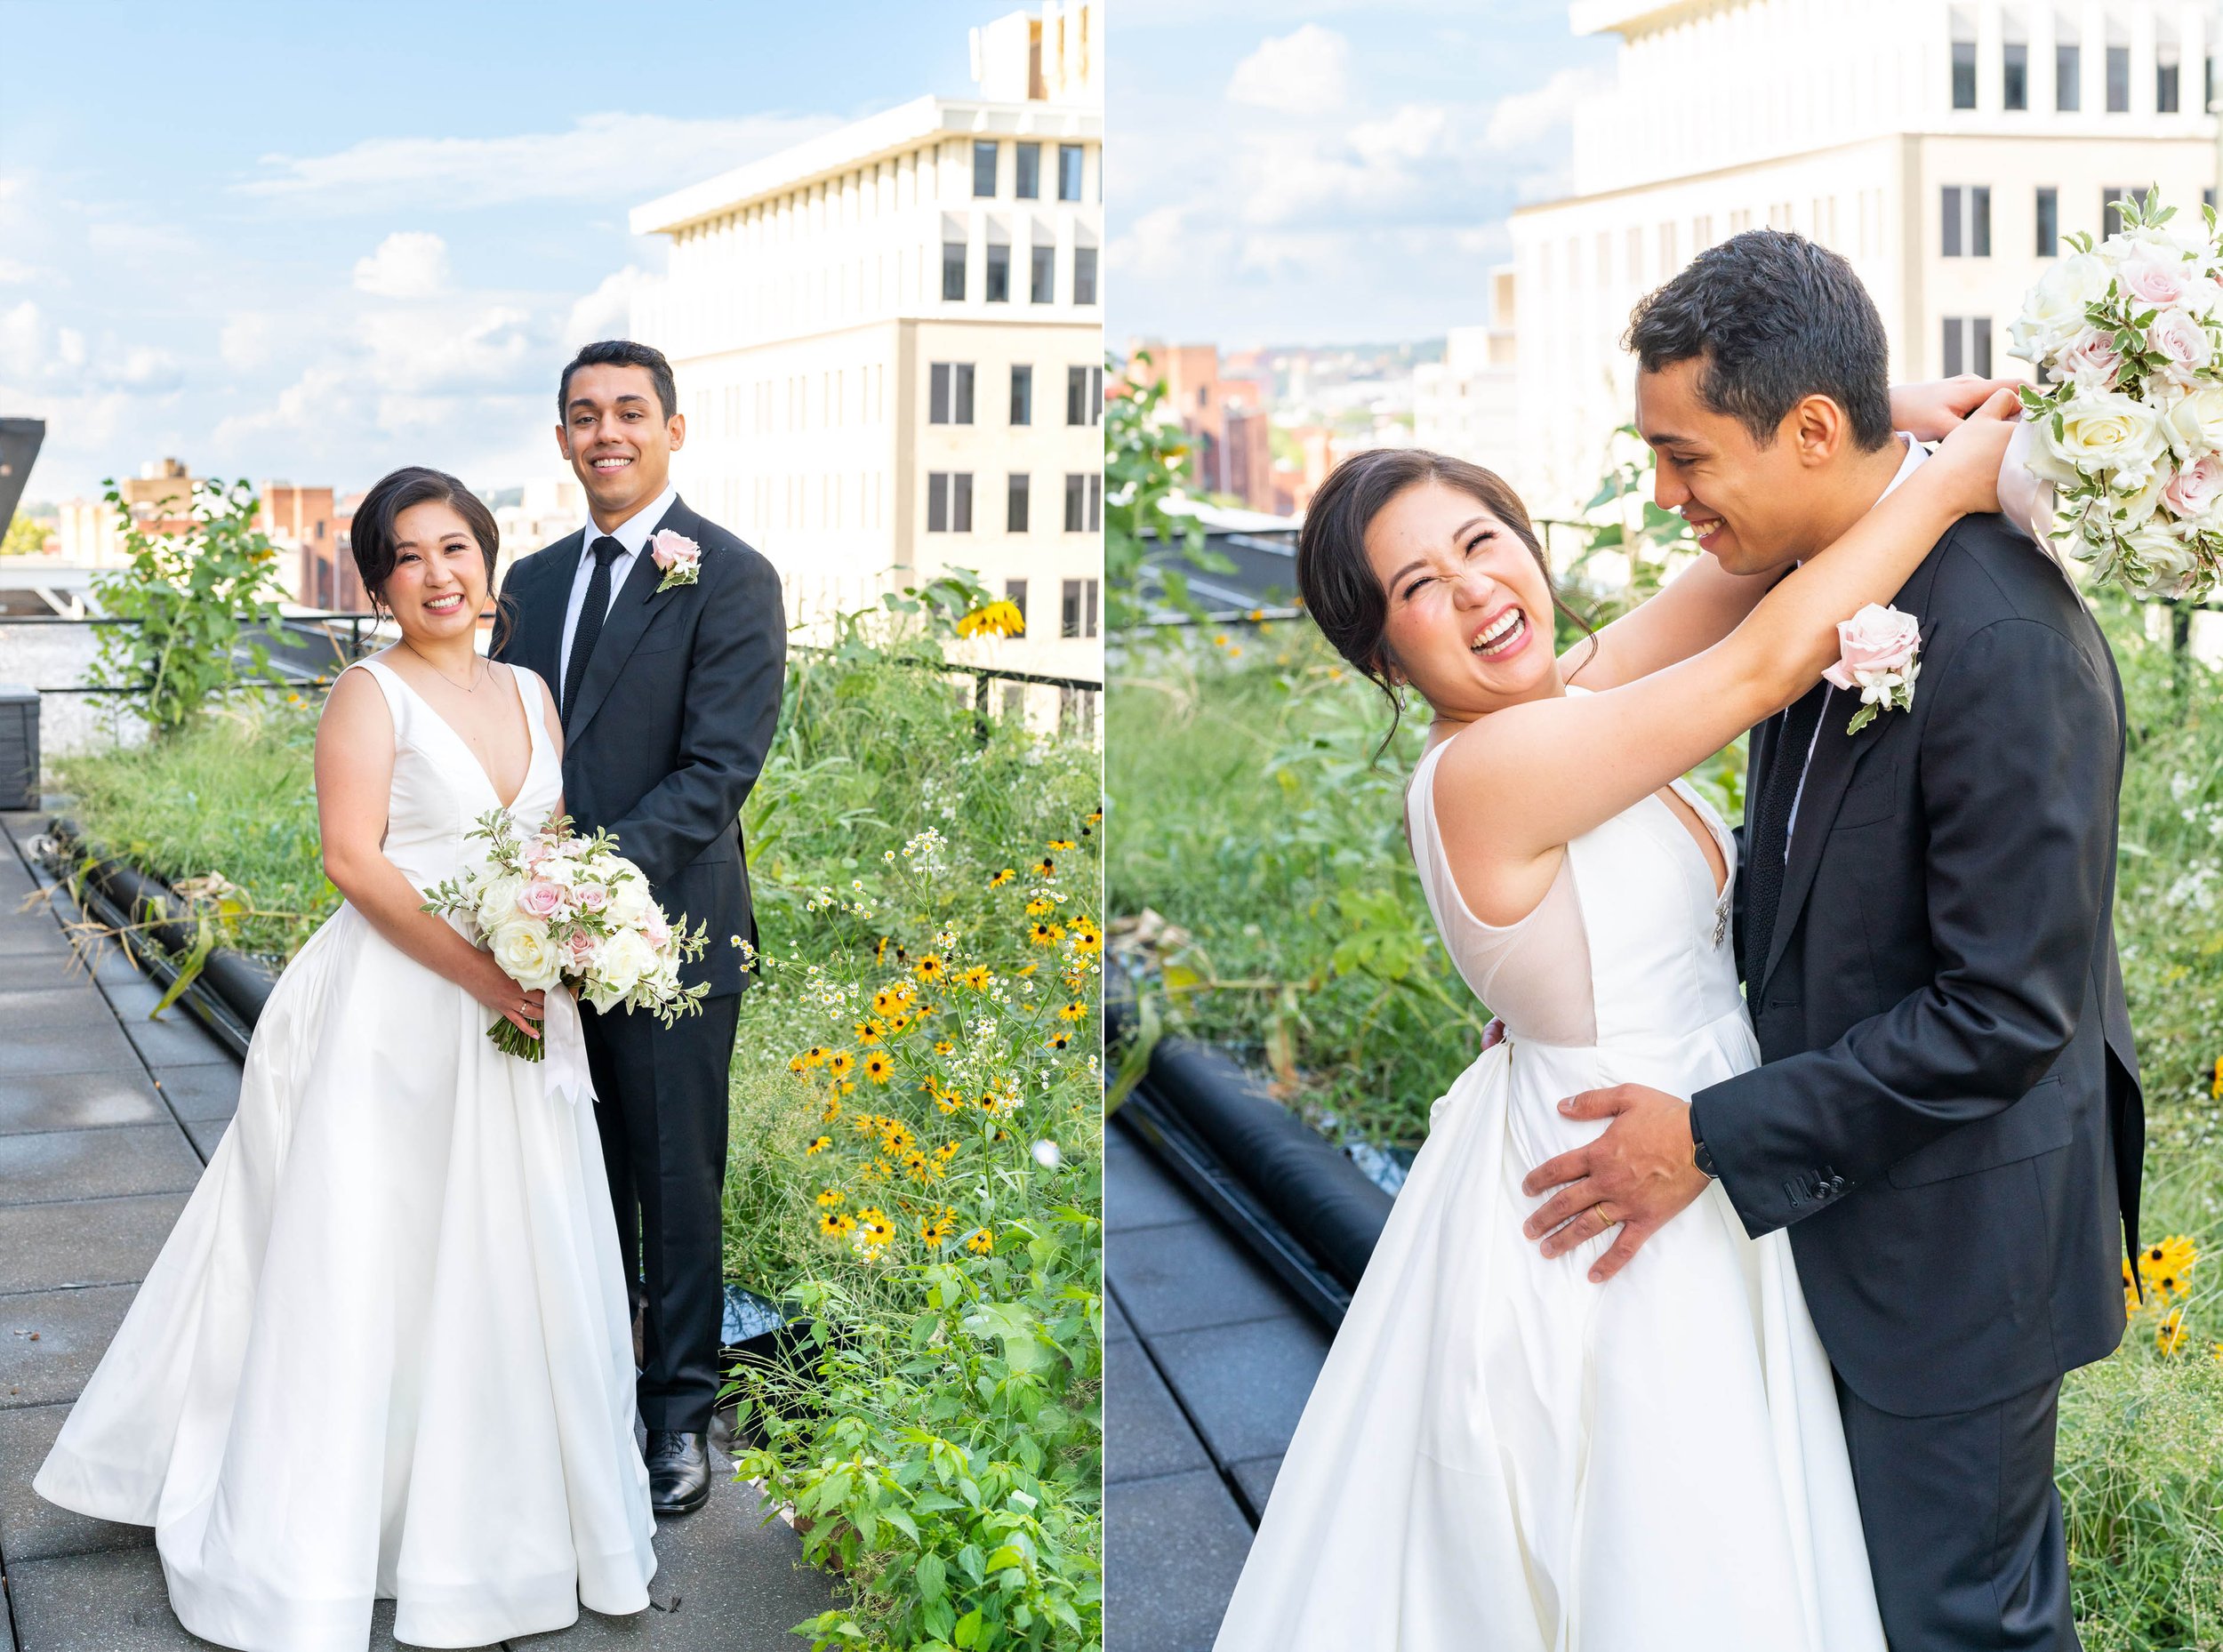 Fun summer rooftop bride and groom wedding photos in Washington DC